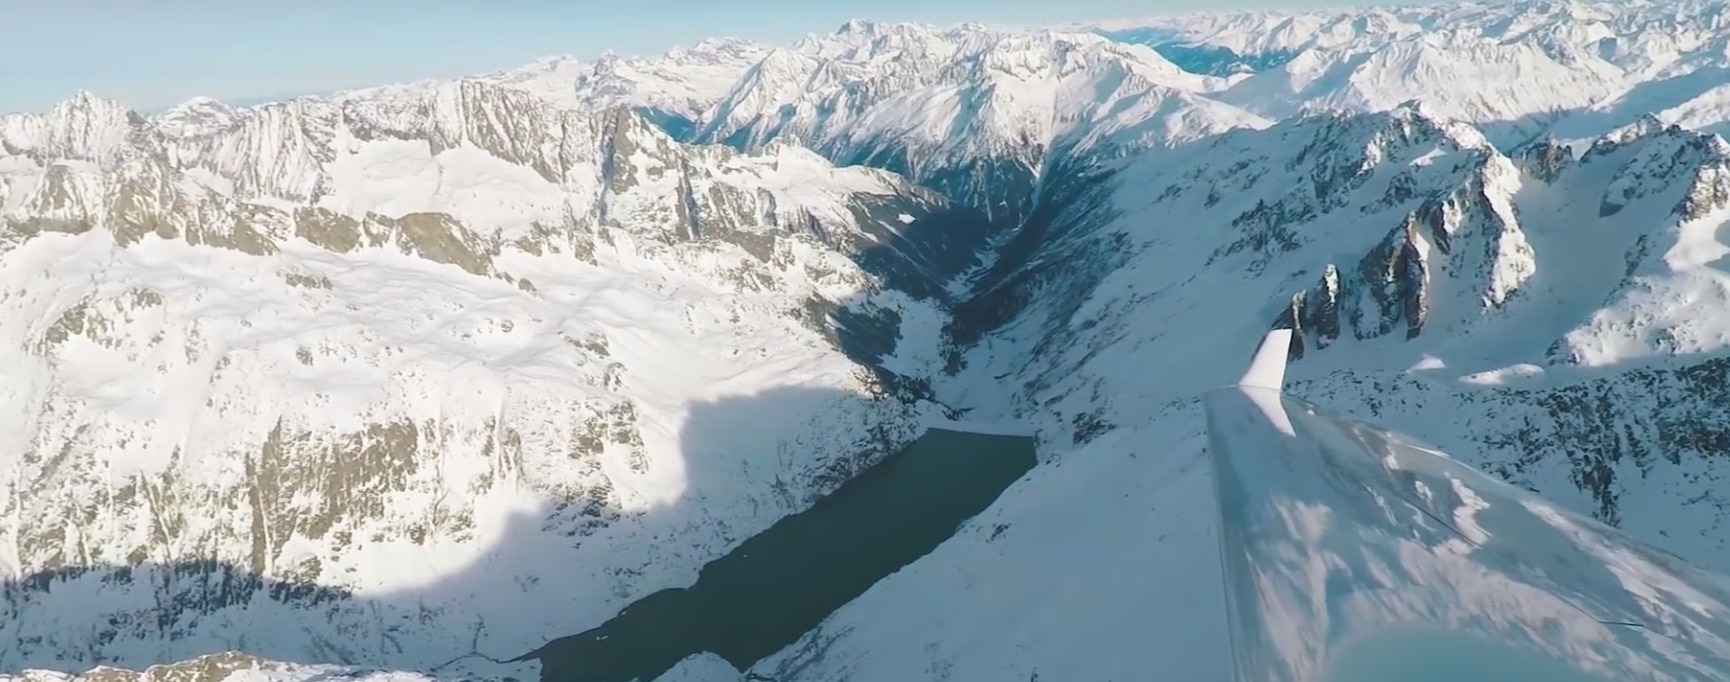 drone, poste, svizzera, oblivion aerial, alpi